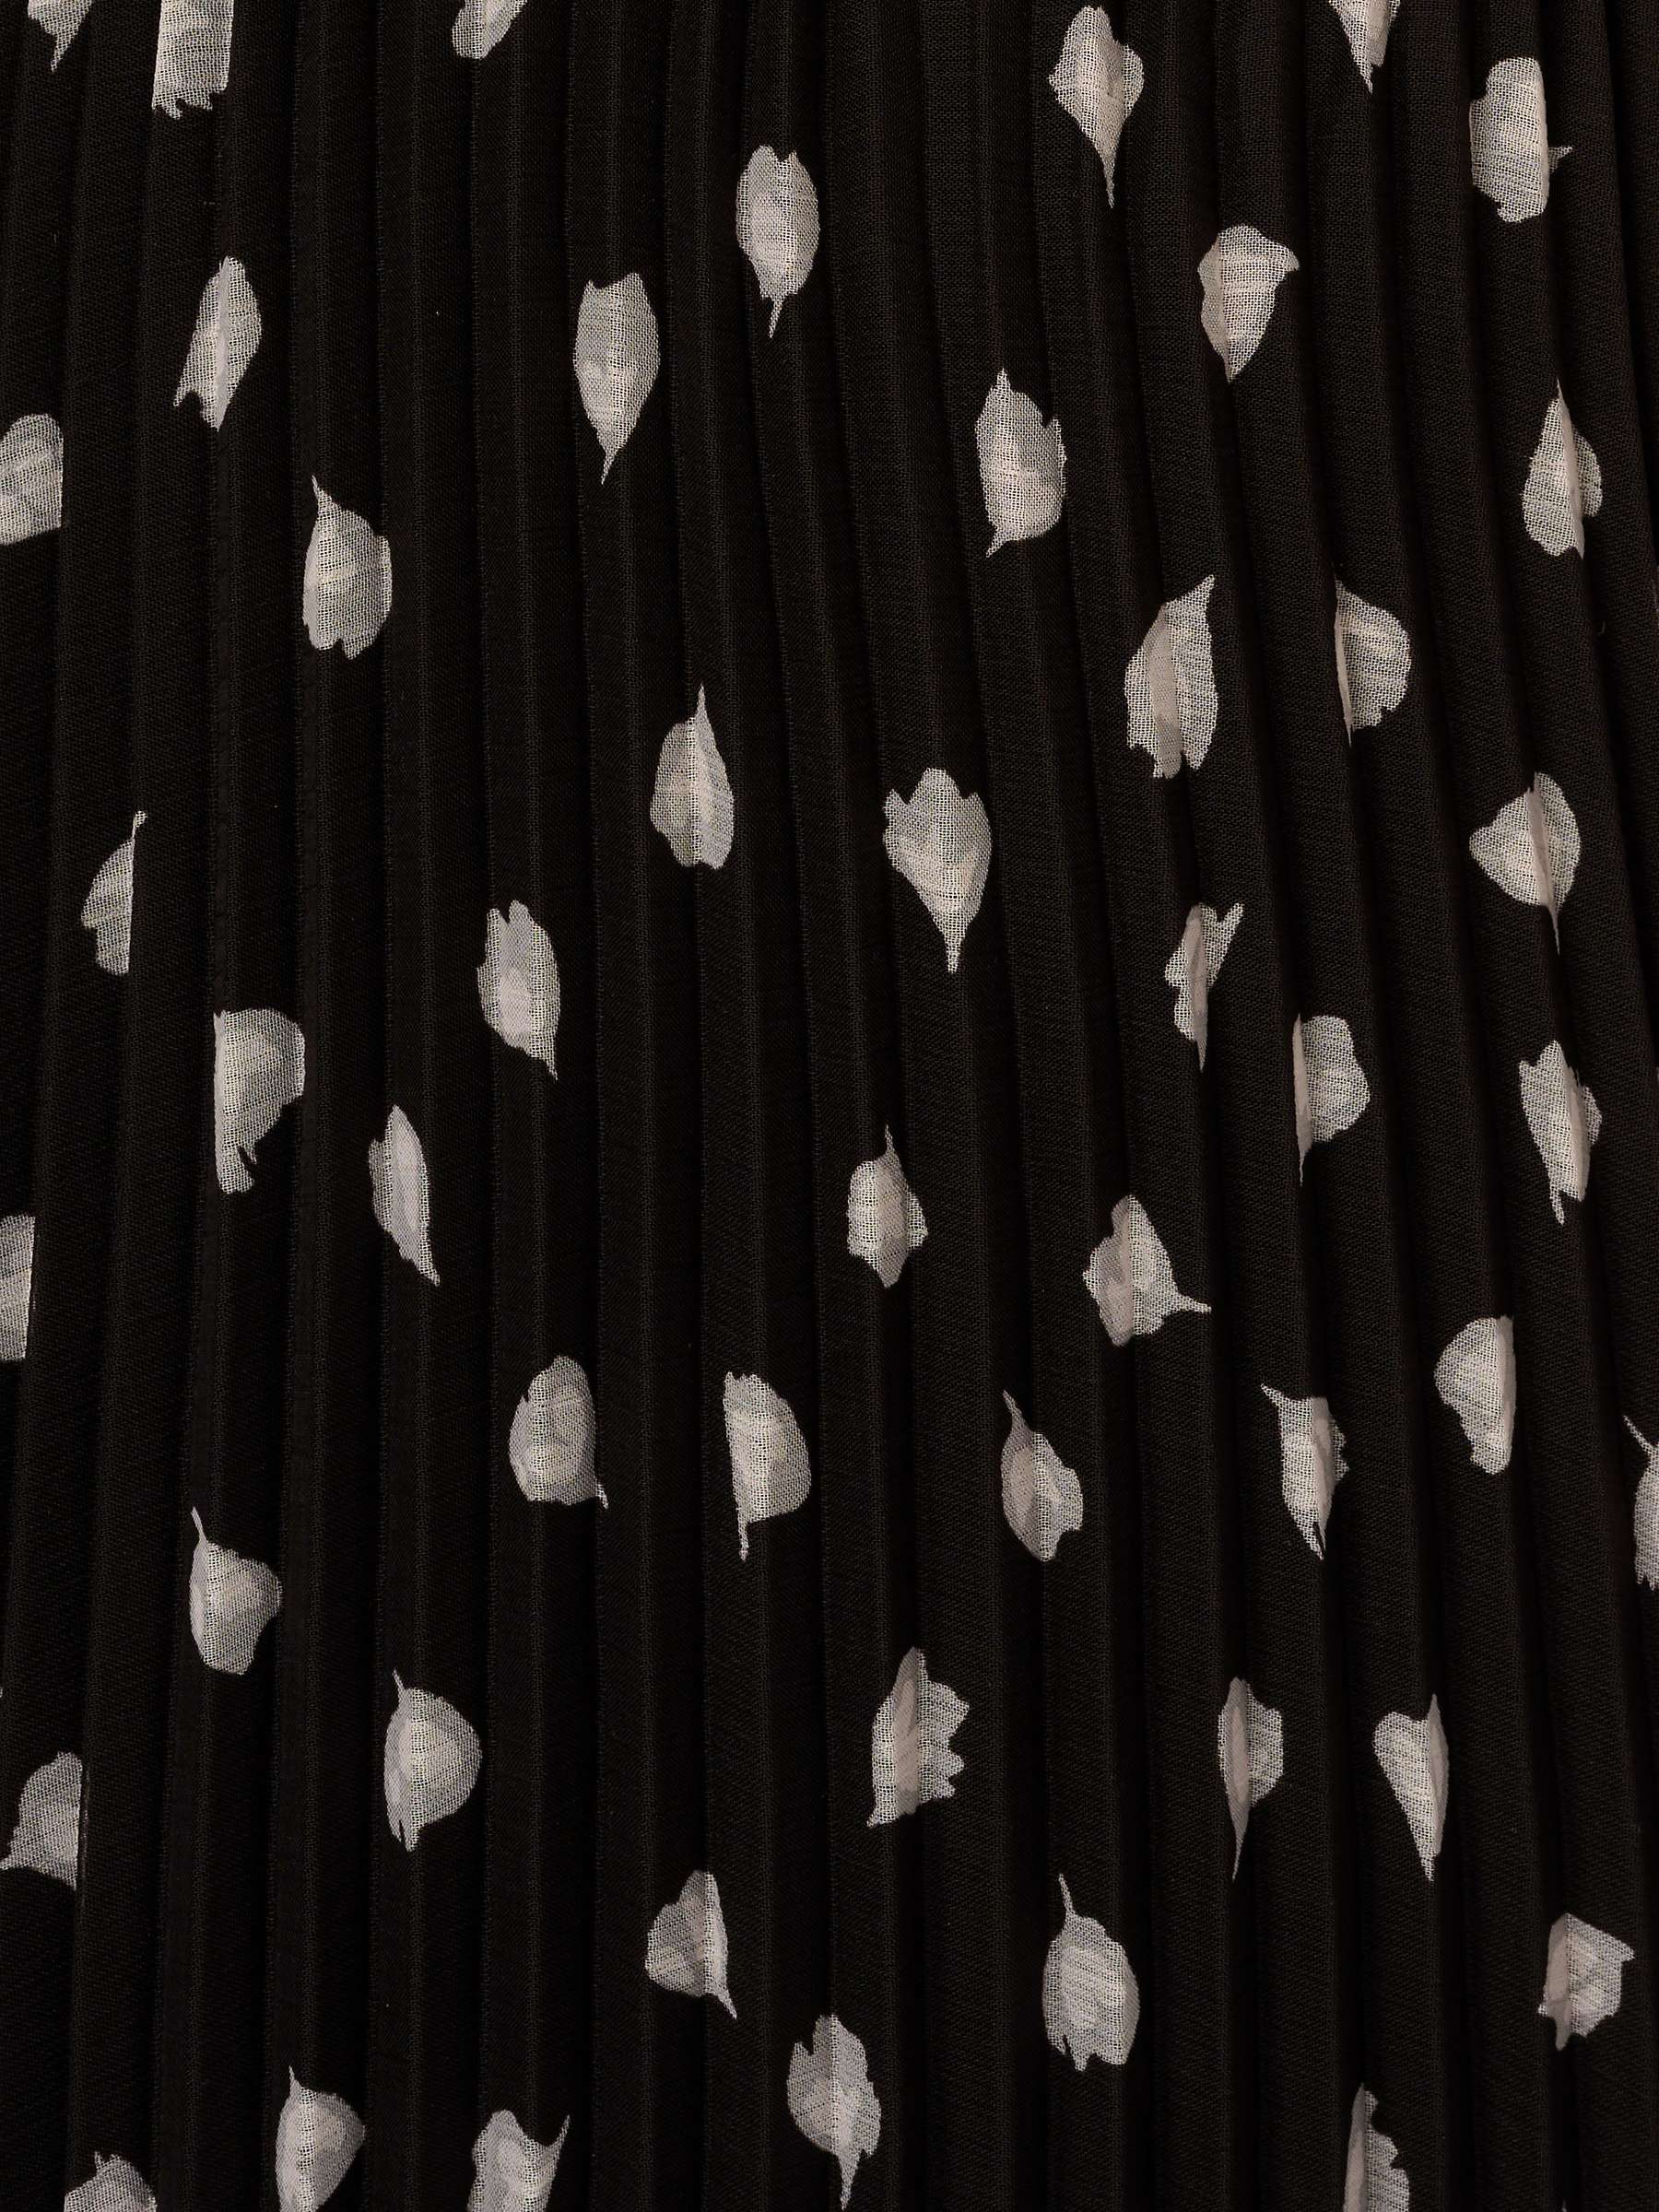 Buy Adrianna Papell Pleated Midi Dress, Black/Ivory Online at johnlewis.com